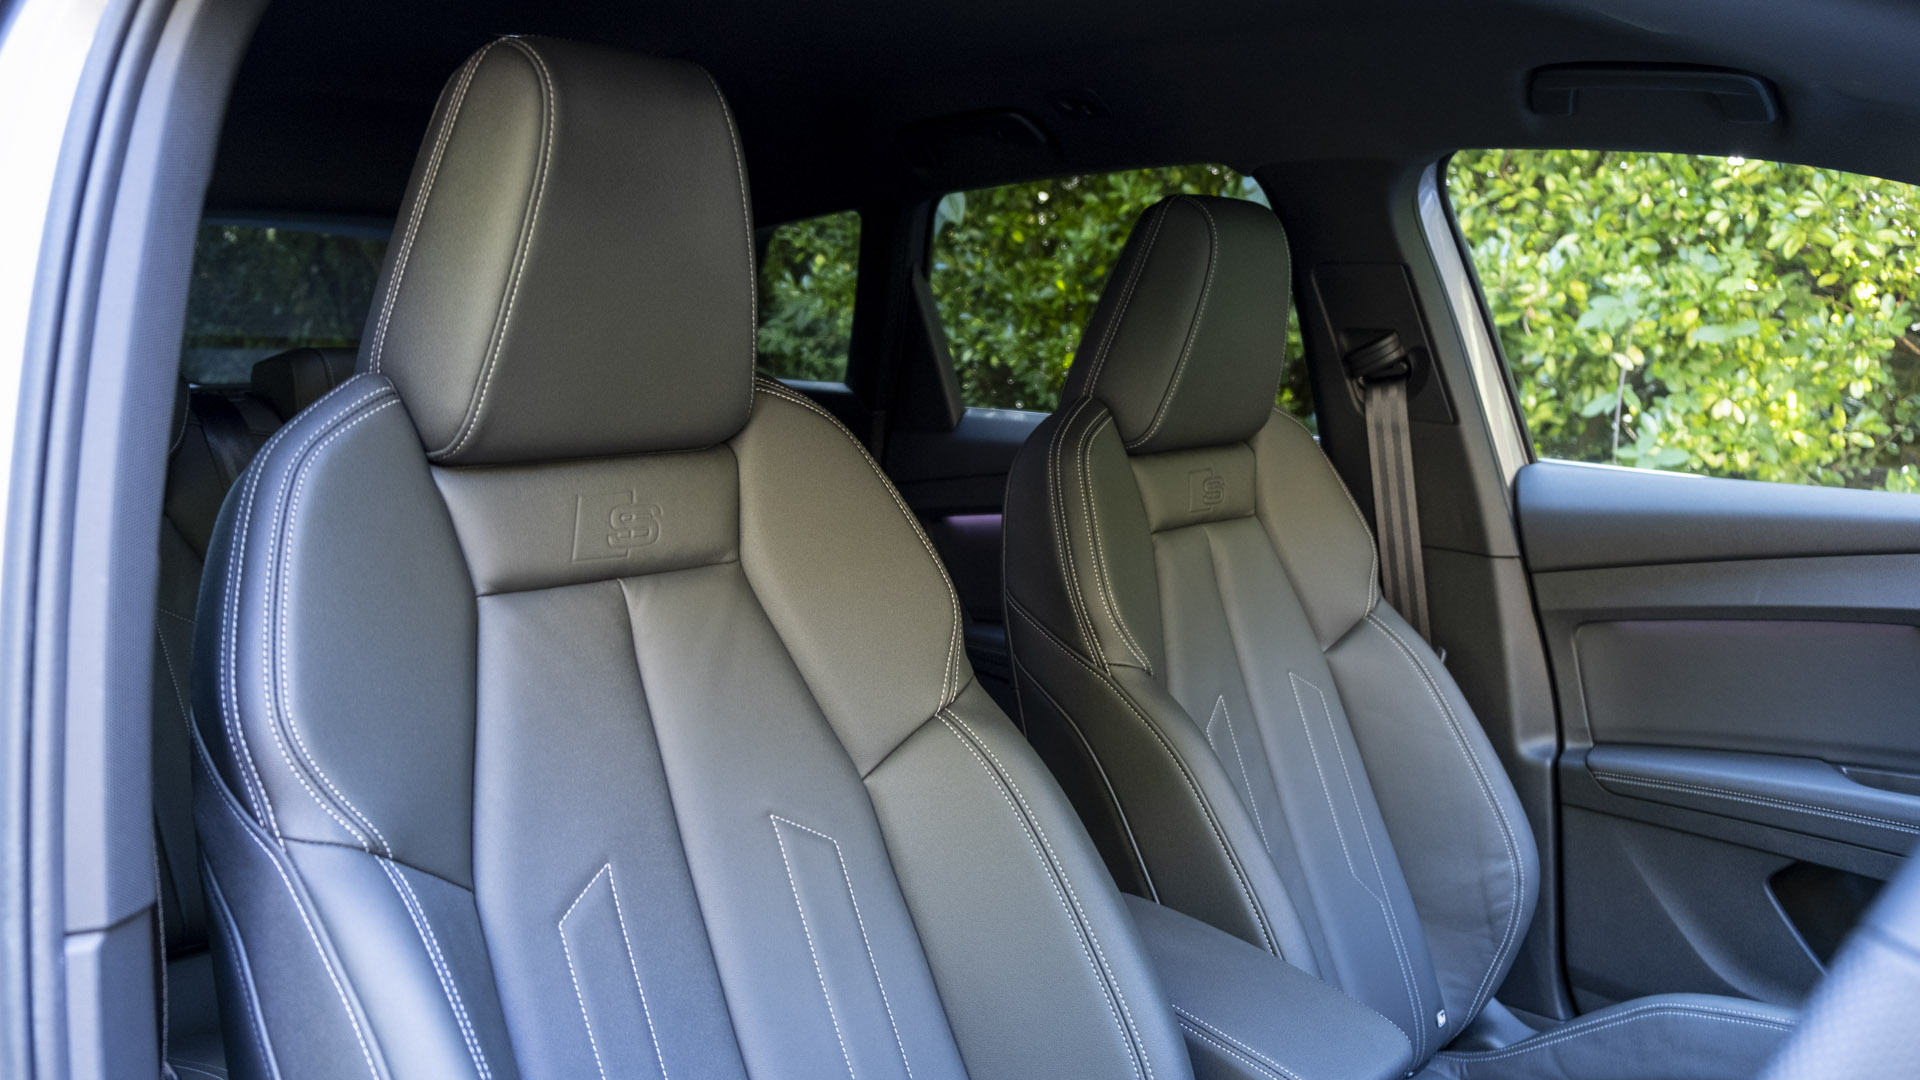 Audi Q4 e-tron seat comfort